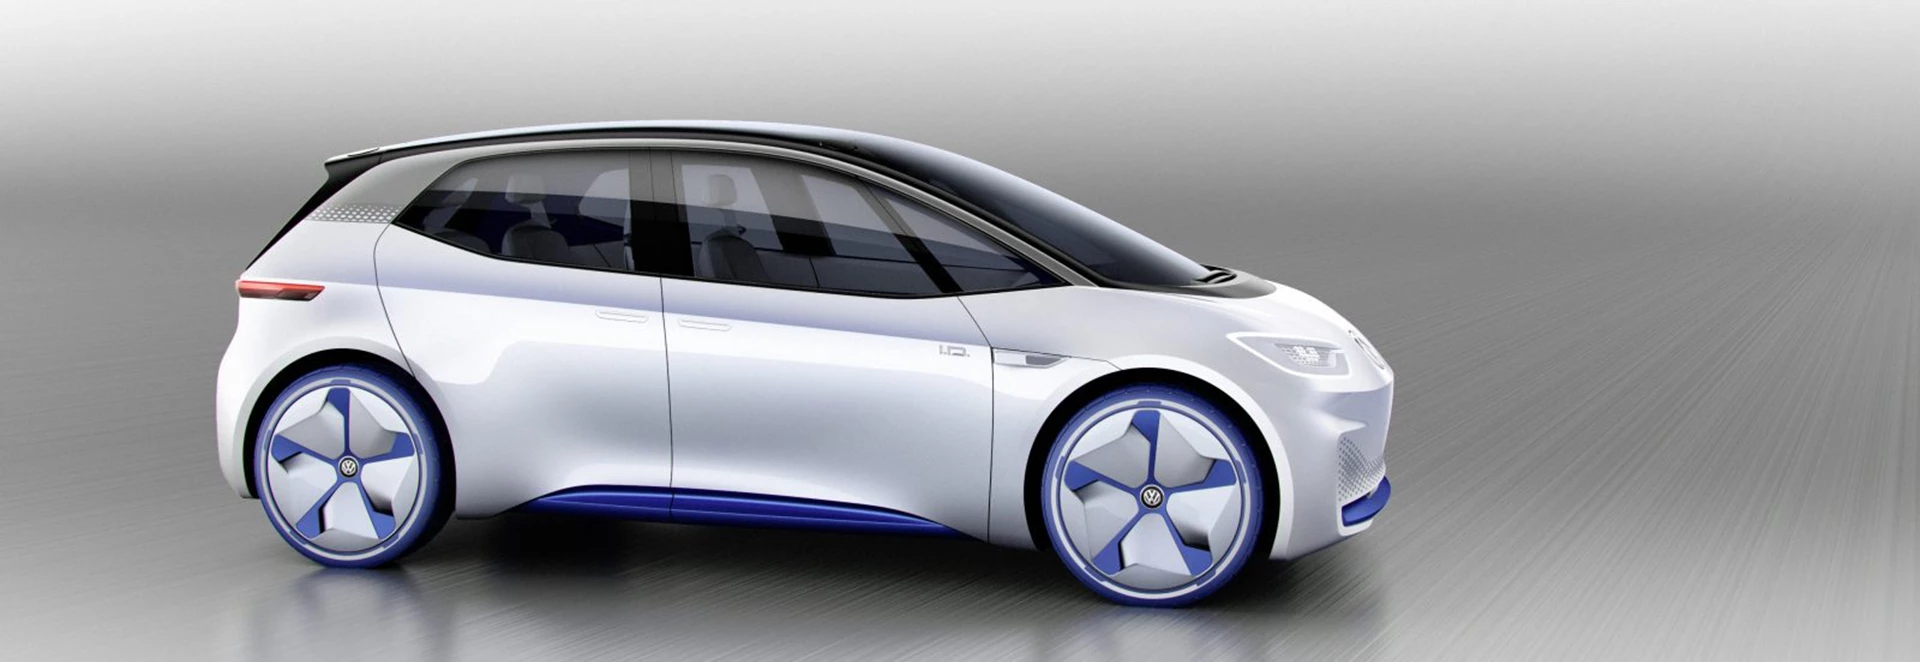 Volkswagen unveils ID Electric Concept, the autonomous electric car of the future